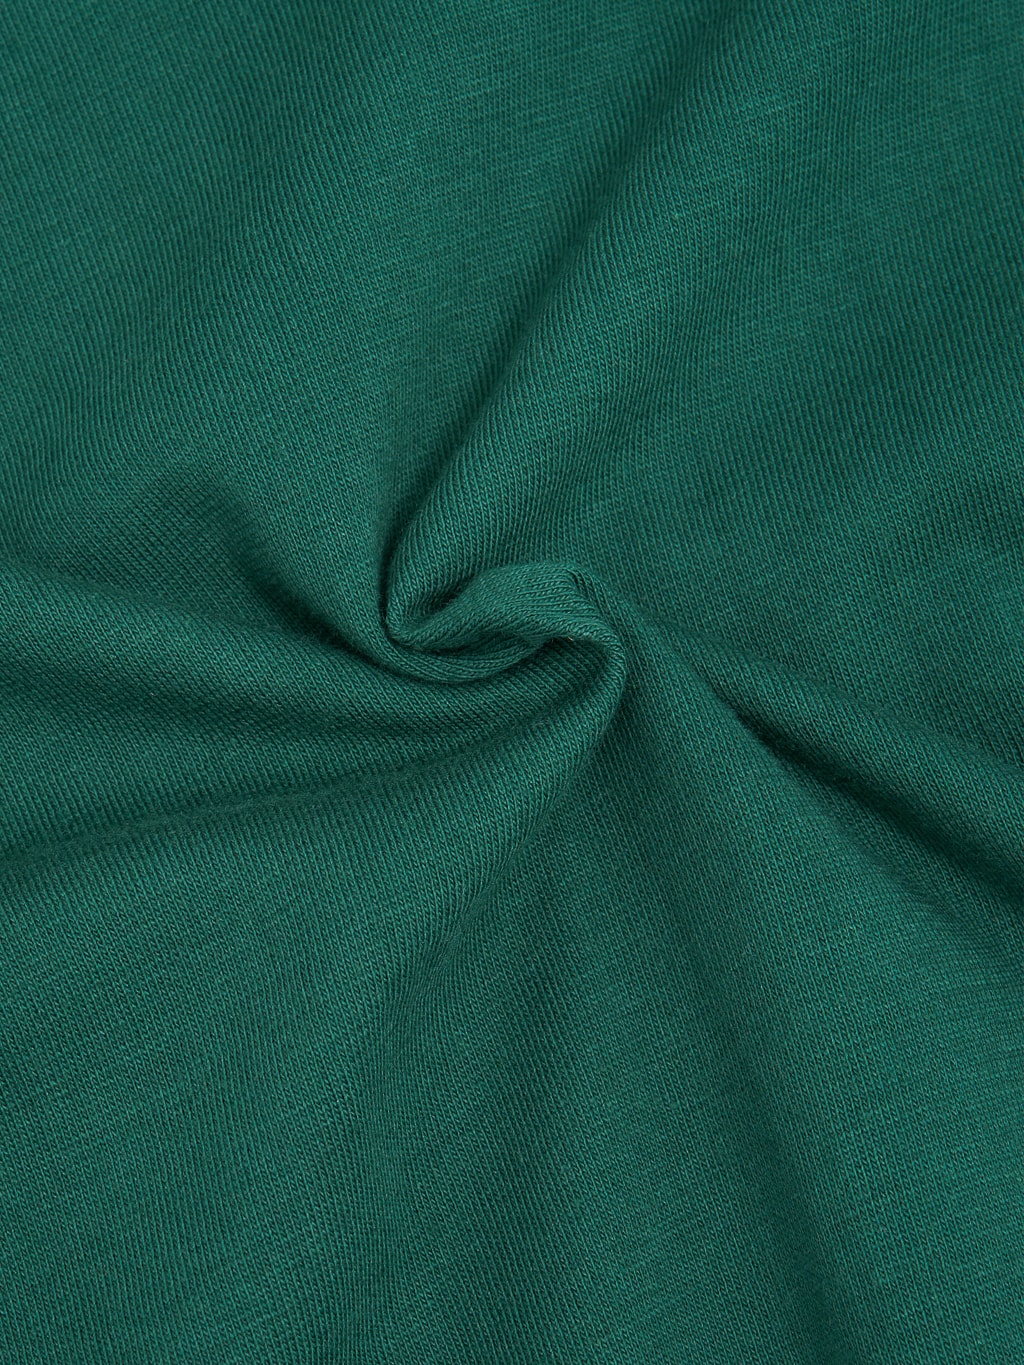 Merz b Schwanen 1950s Loopwheeled Classic TShirt green  texture